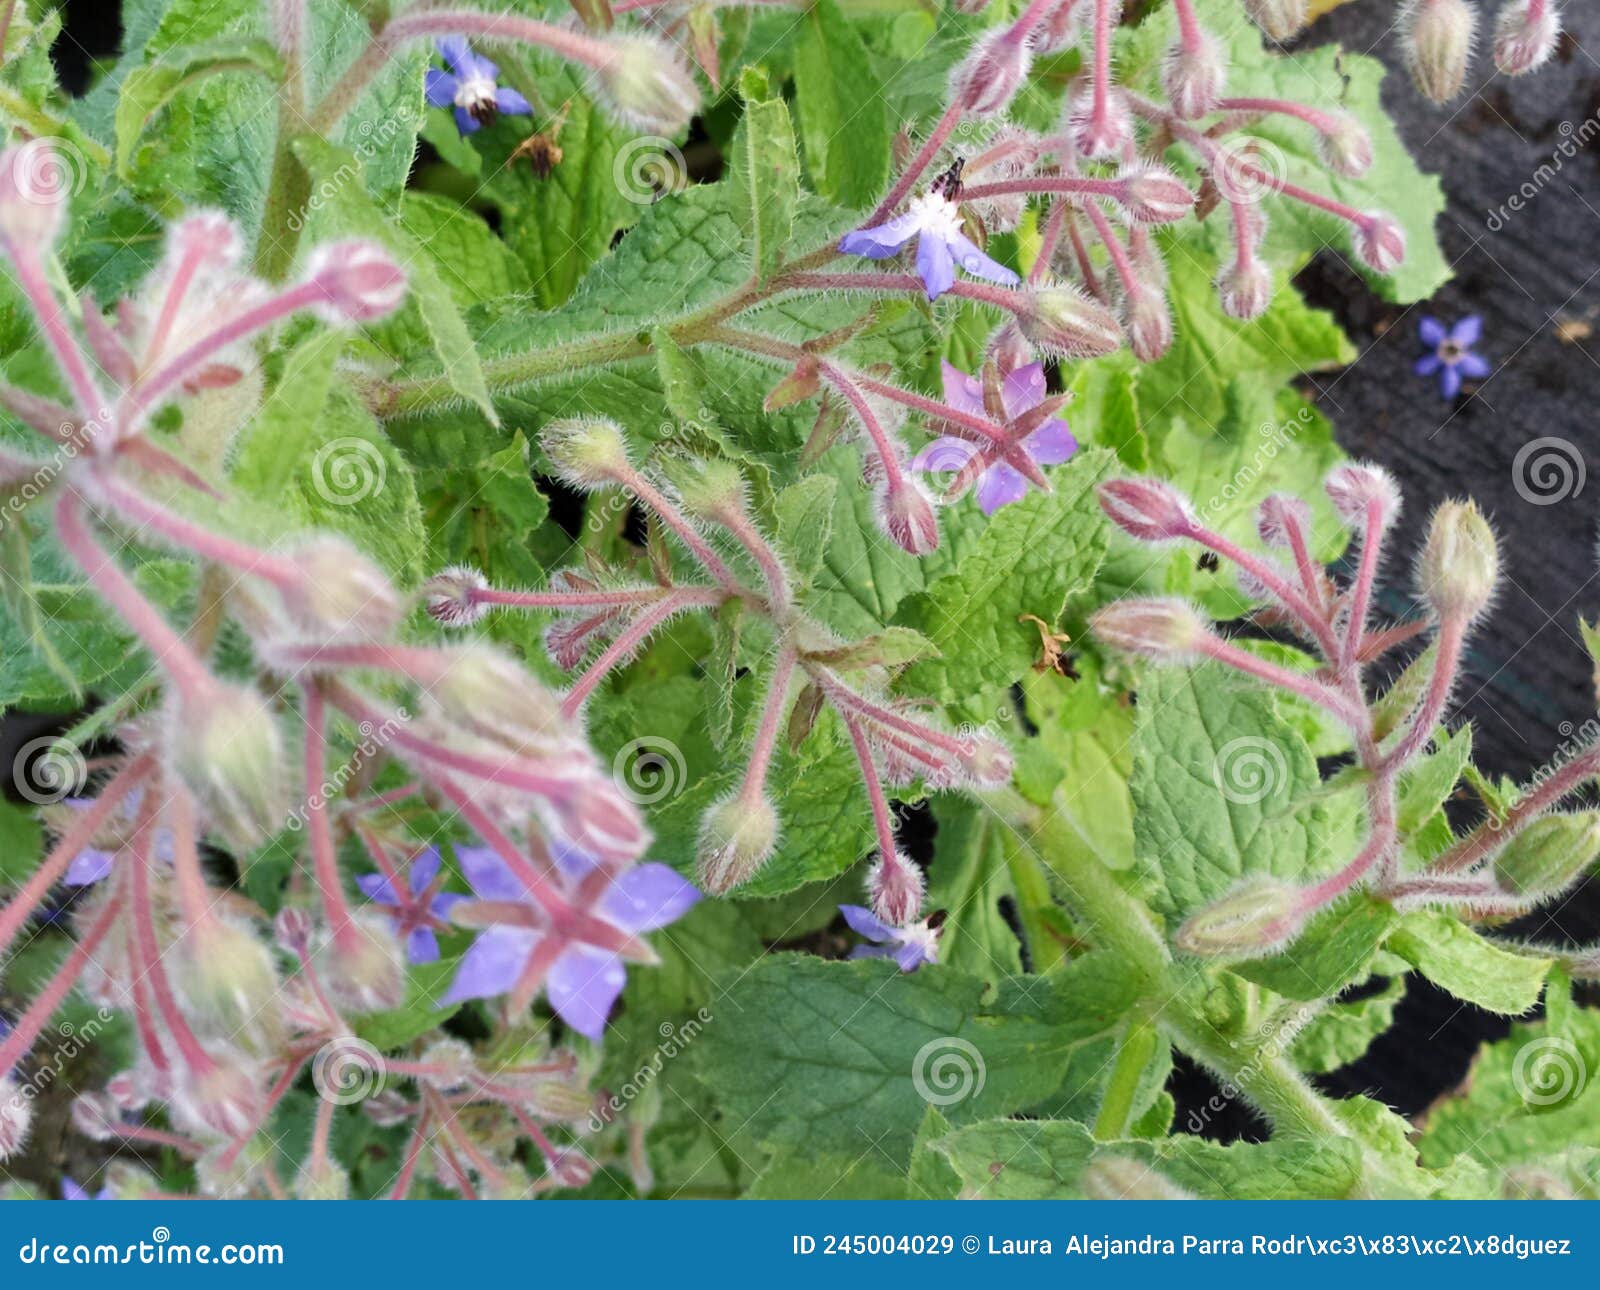 a group of purple borage flowers. un grupo de flores de borraja moradas colgando